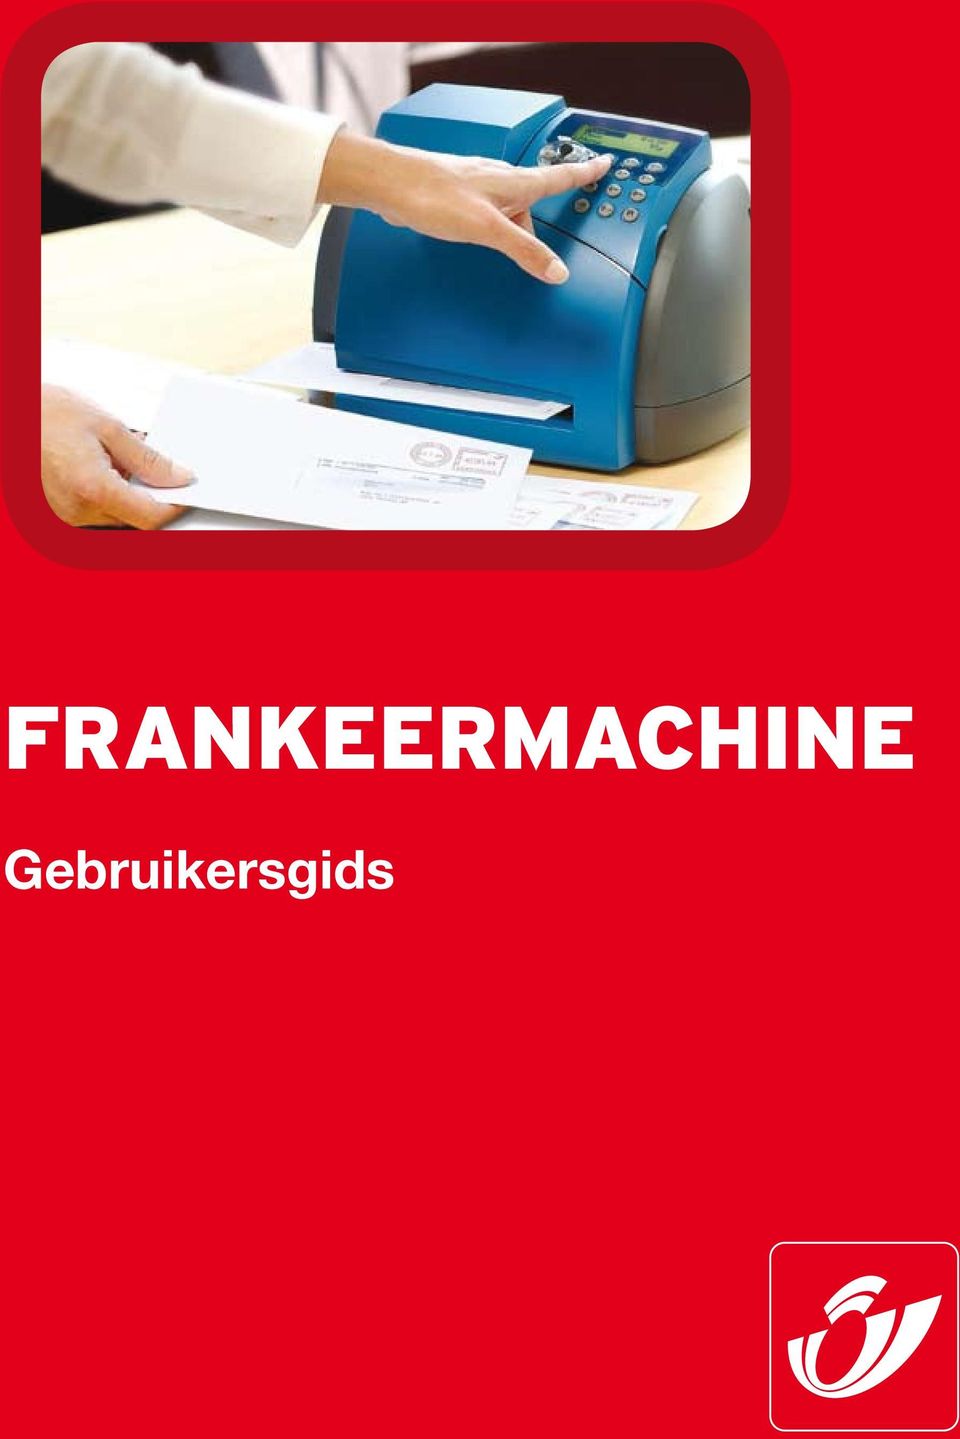 Frankeermachine. Gebruikersgids - PDF Gratis download